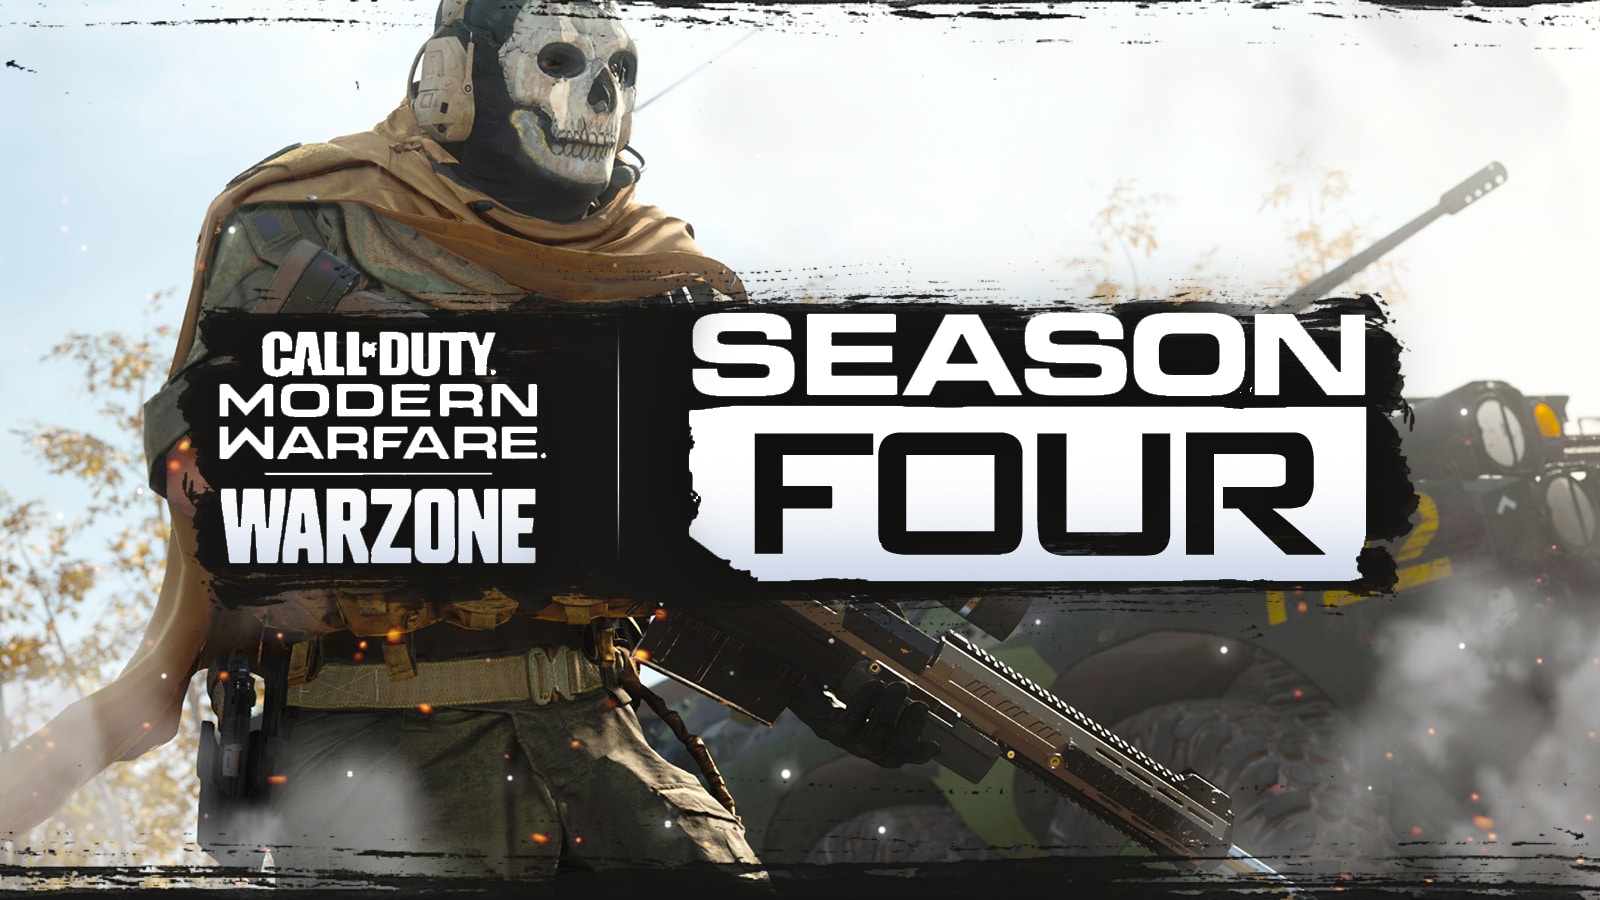 Season Four de Call Of Duty | Modern Warfare vem com 32 GB.